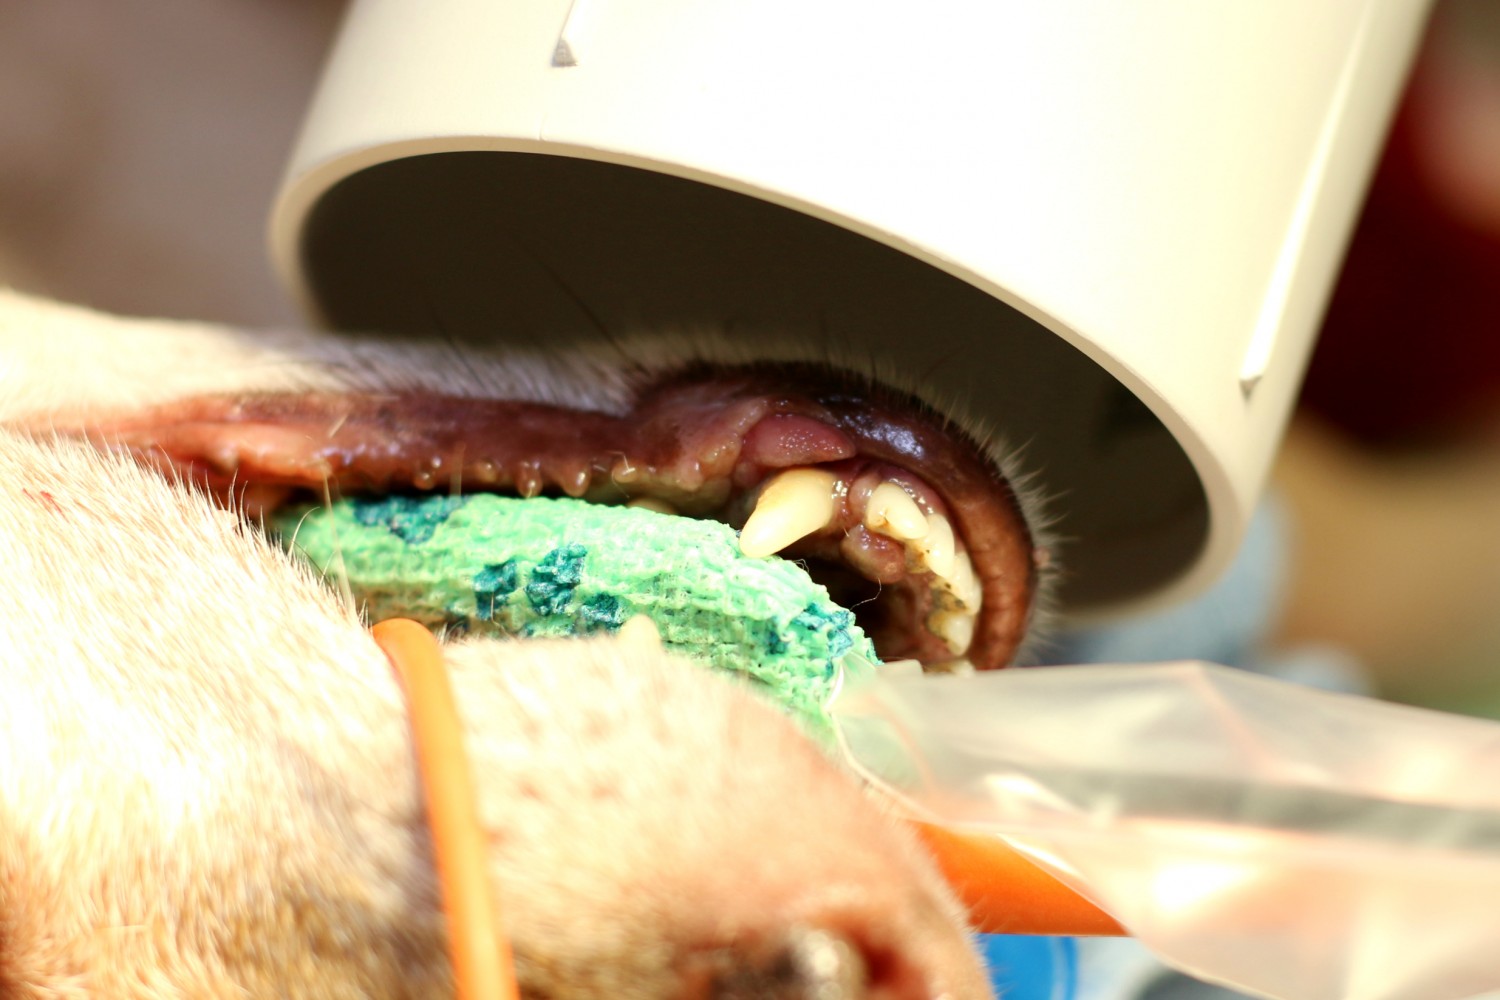 Dog receiving dental work